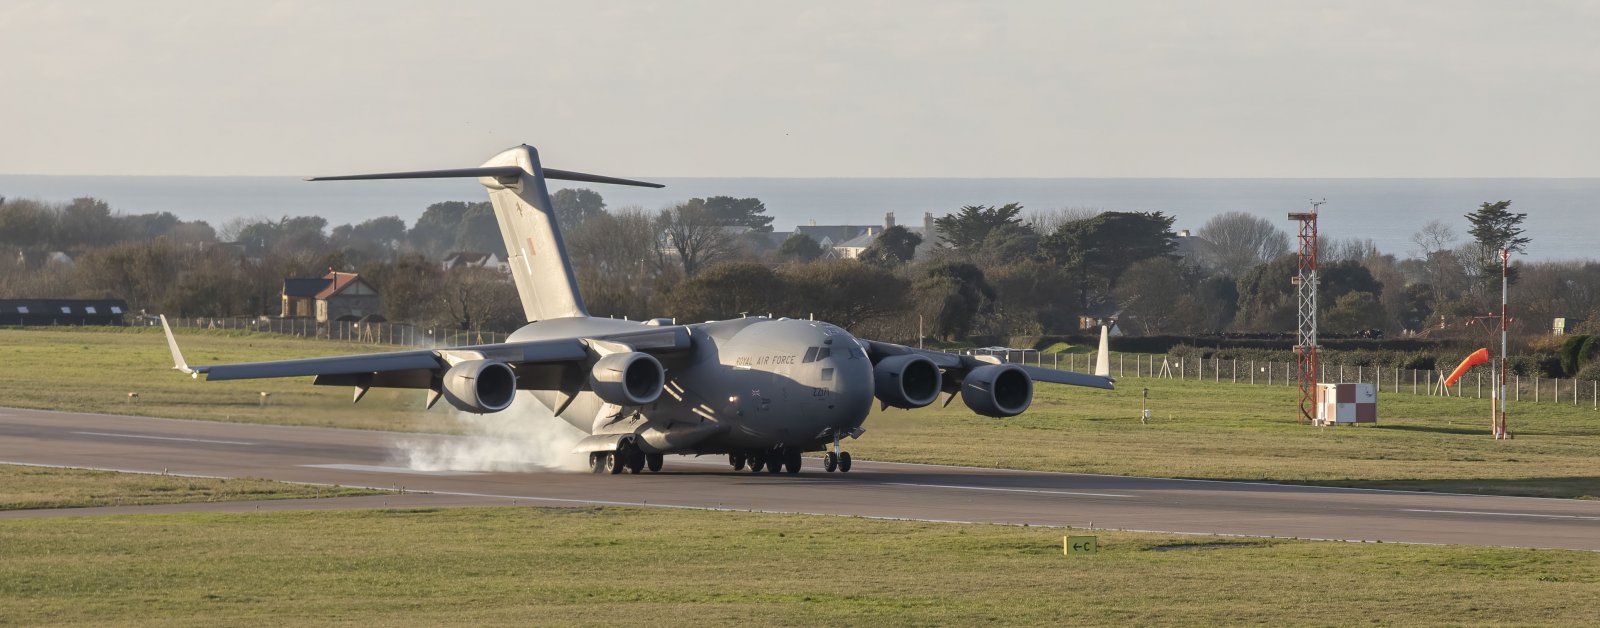 C-17 Landing Guernsey Airport November 2020